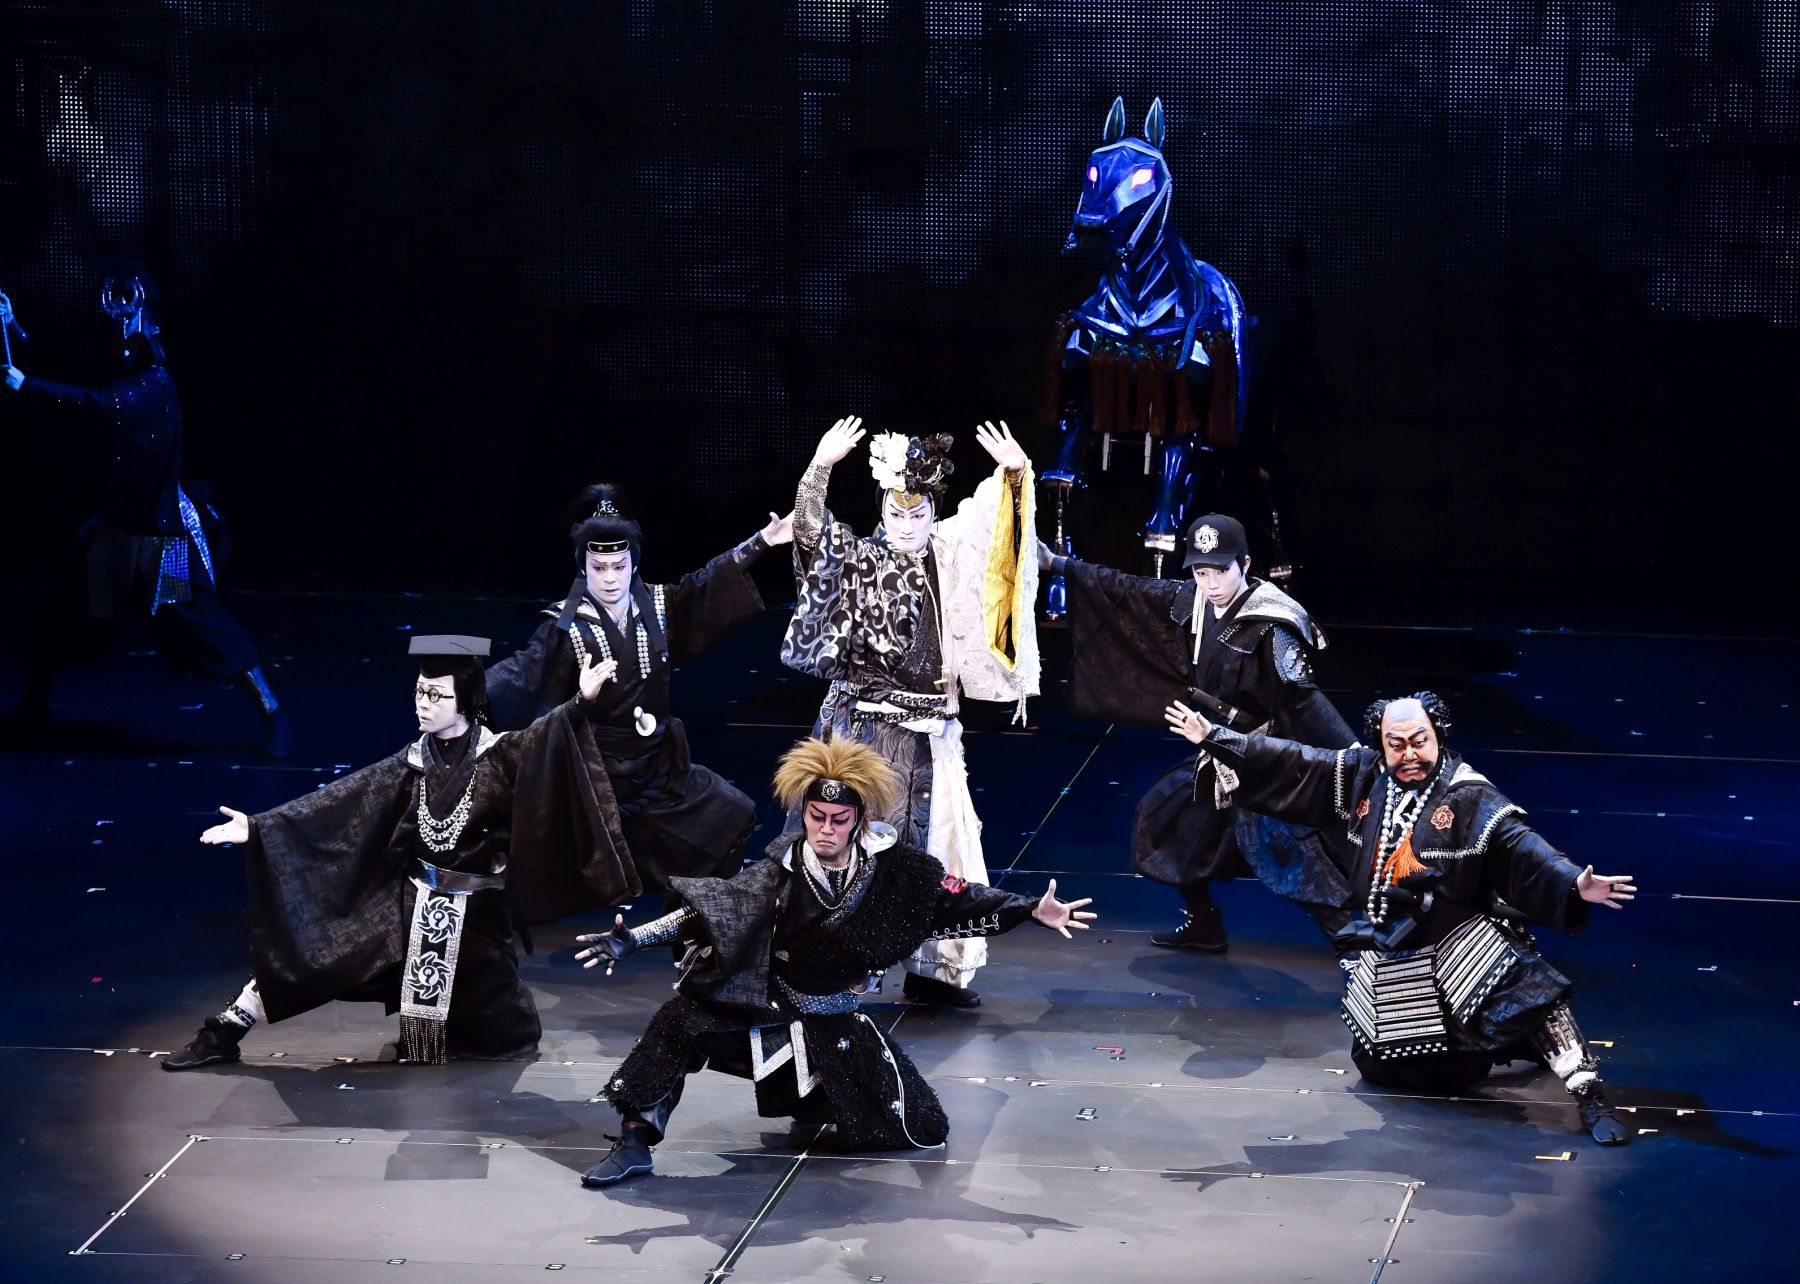 Super Kabuki play Oguri at the Shinbashi Enbujo Theatre Japan 003